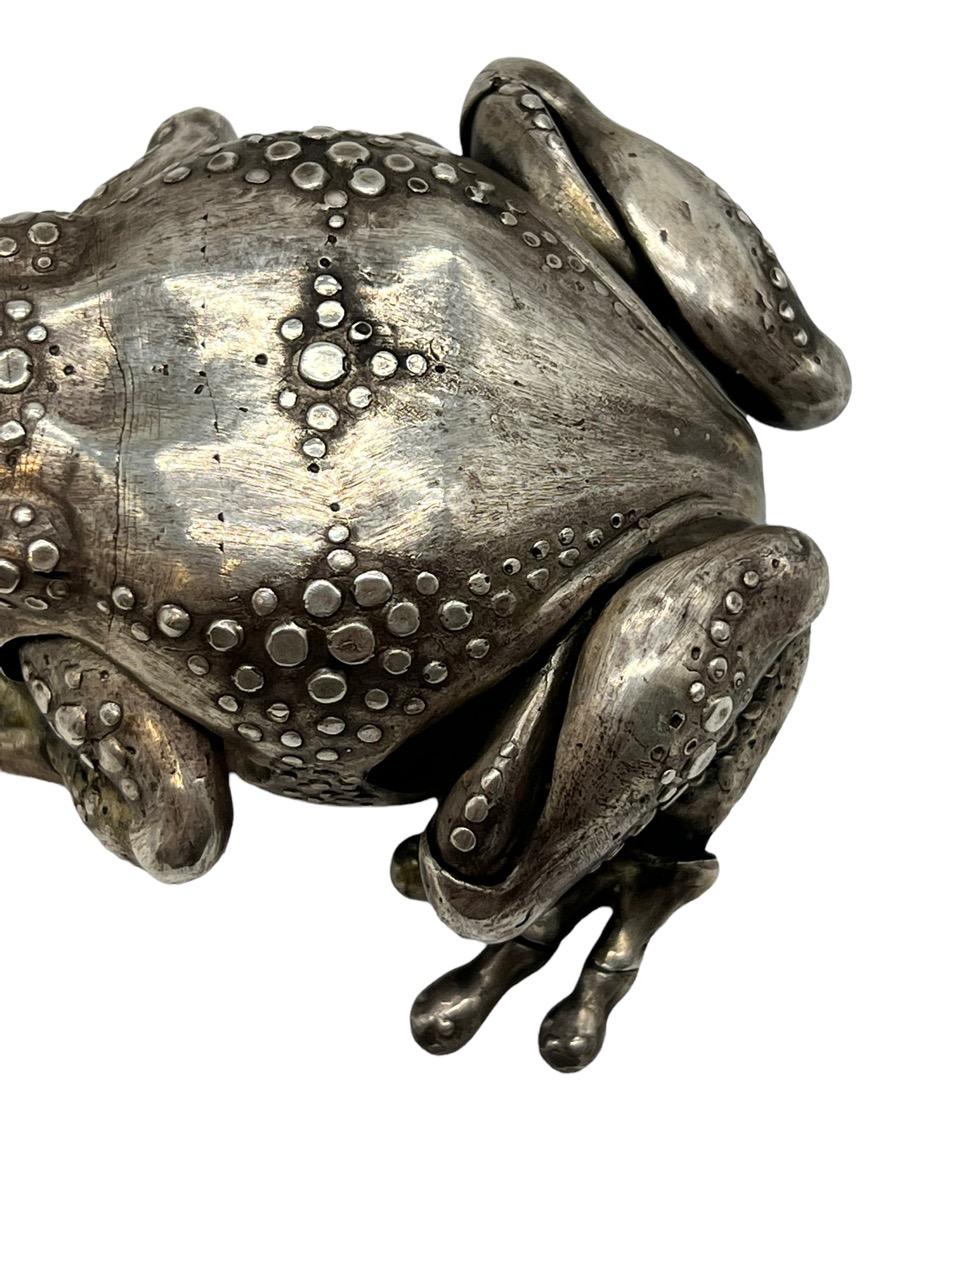 Oleg Konstantinov Fully Articulated Frog Made of Sterling Silver For Sale 7